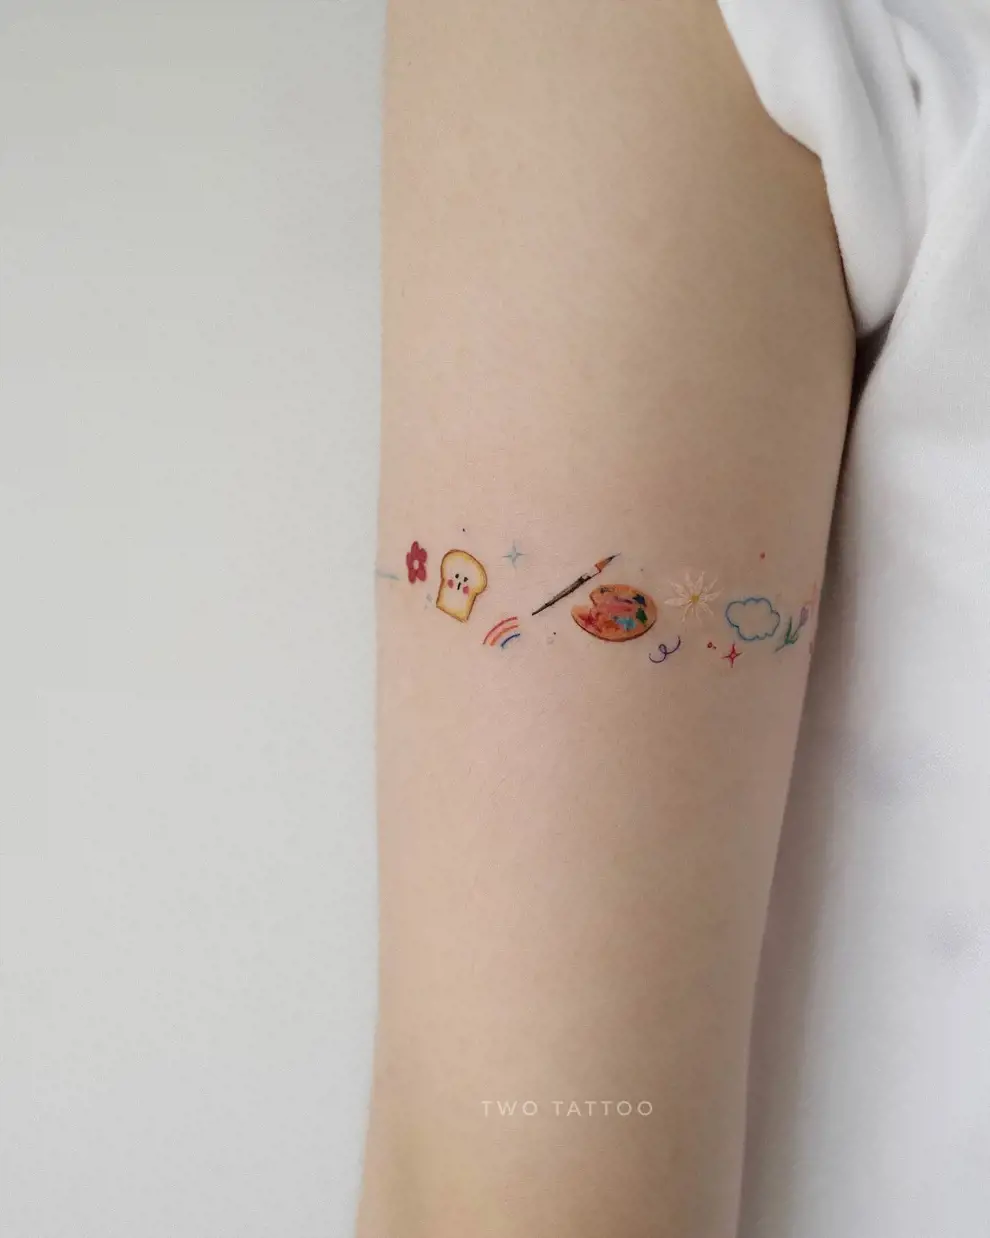 Tatuajes con significado pequeños: detalles mini